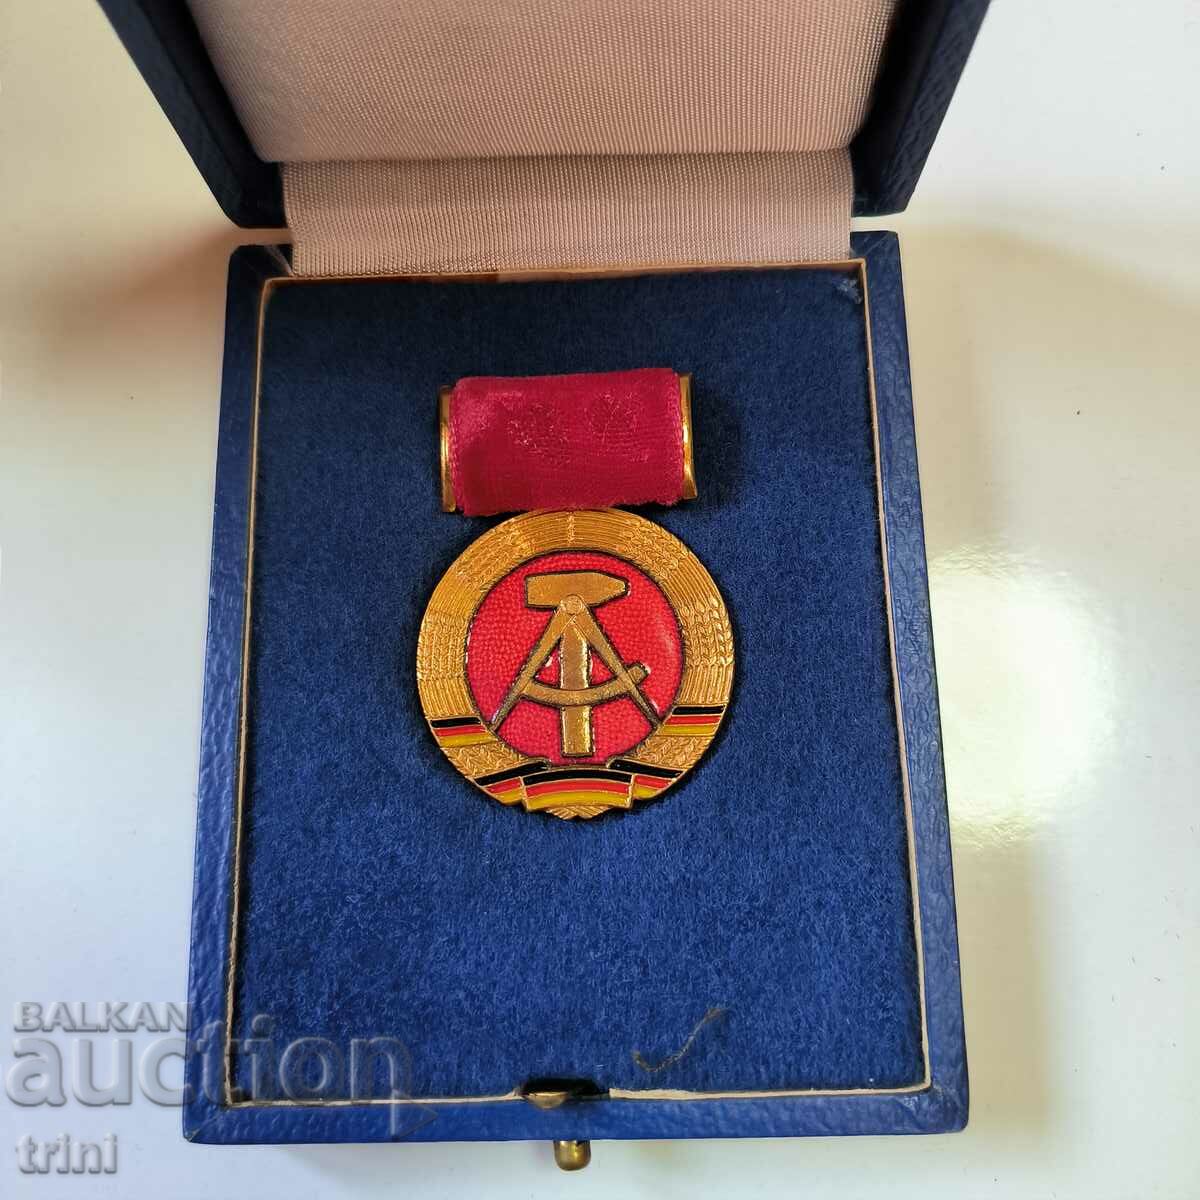 GDR 20th Anniversary Medal Ribbon: red